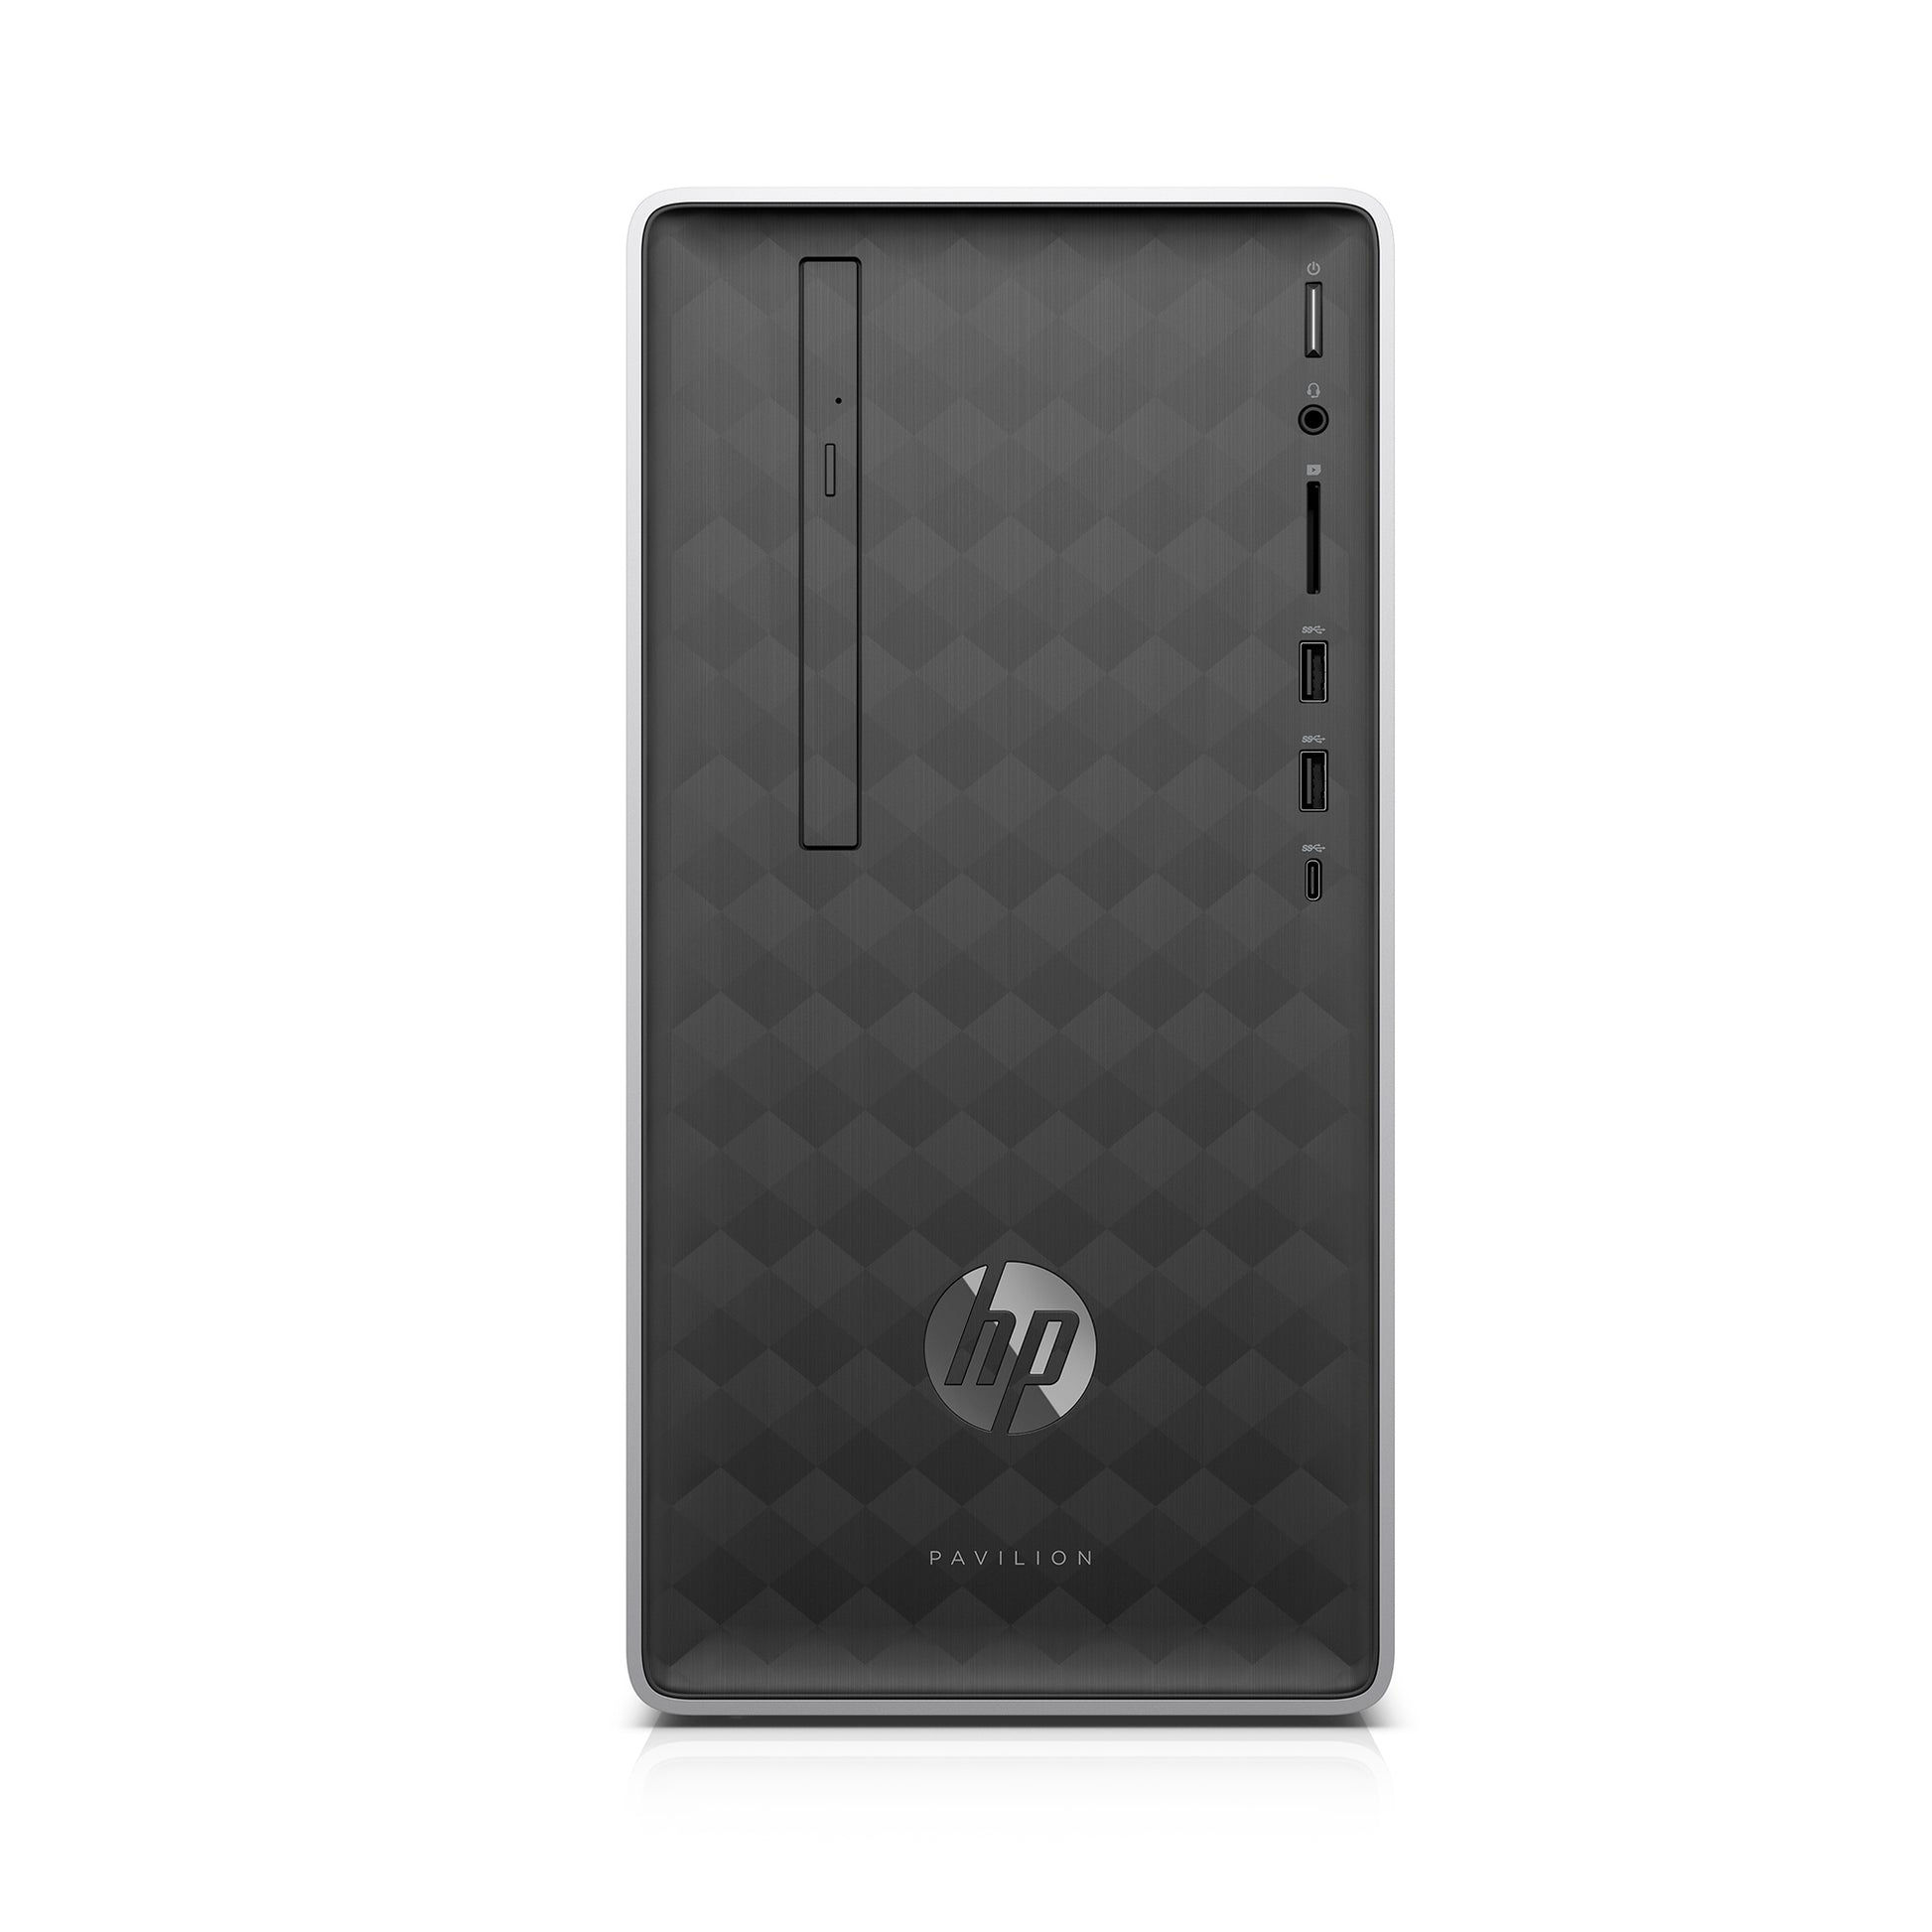 HP Pavilion 590-p0033w Intel i3 - Rekes Sales